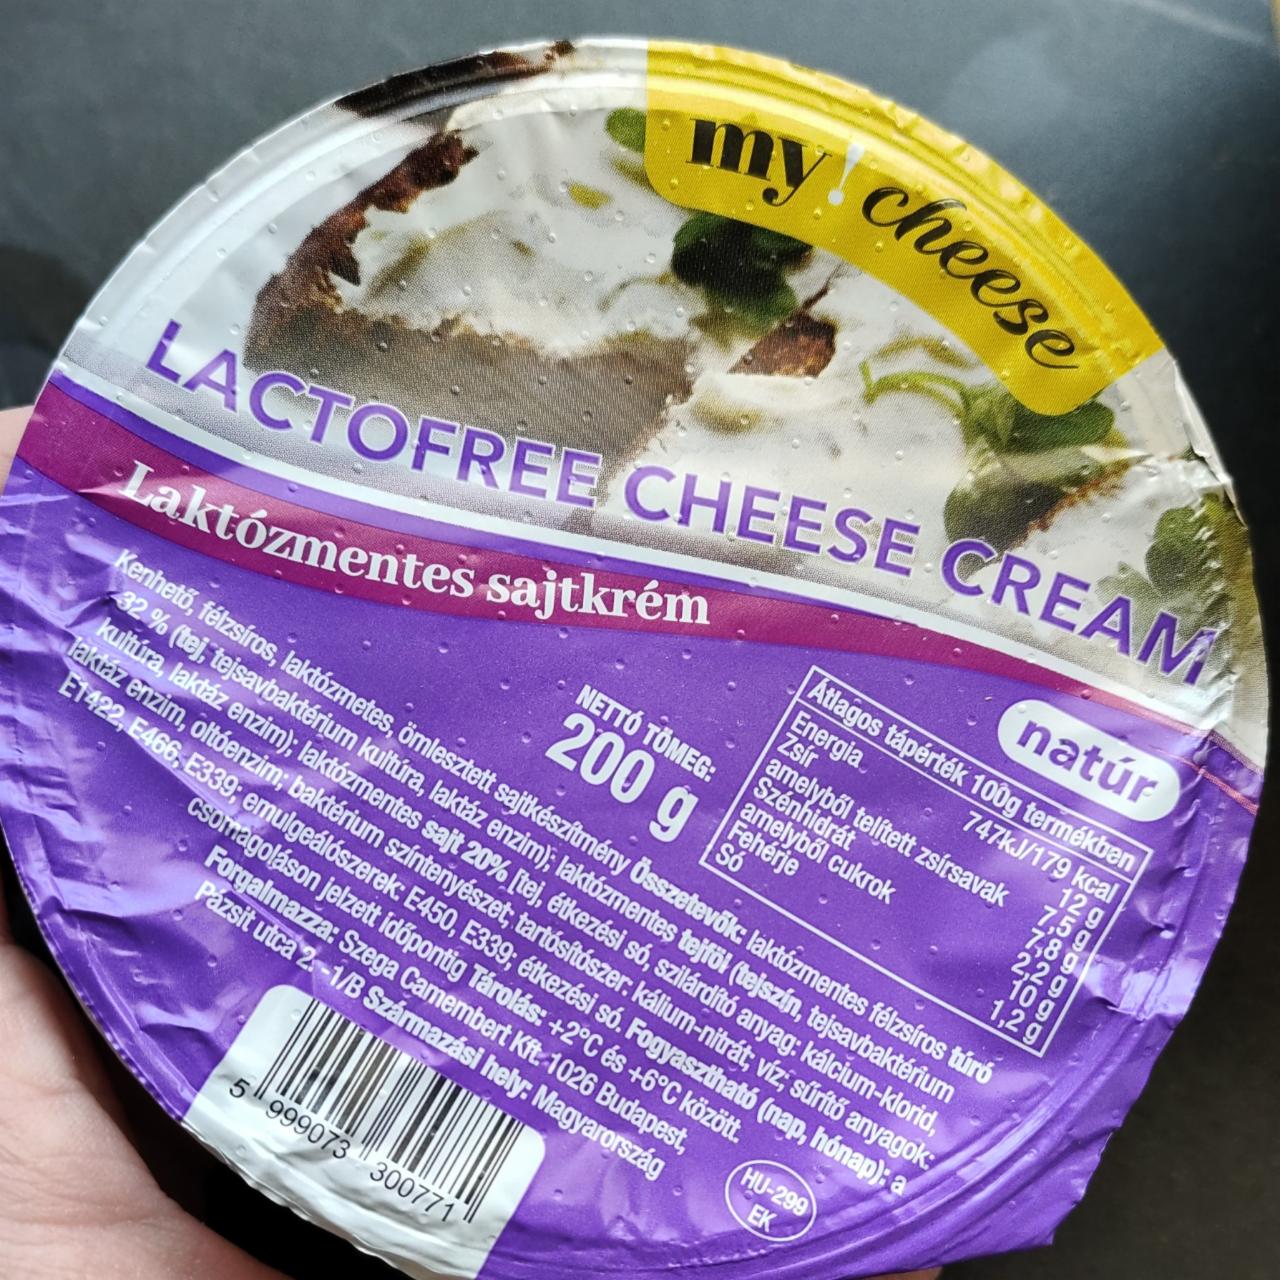 Fotografie - Lactofree Cheese Cream natúr My cheese